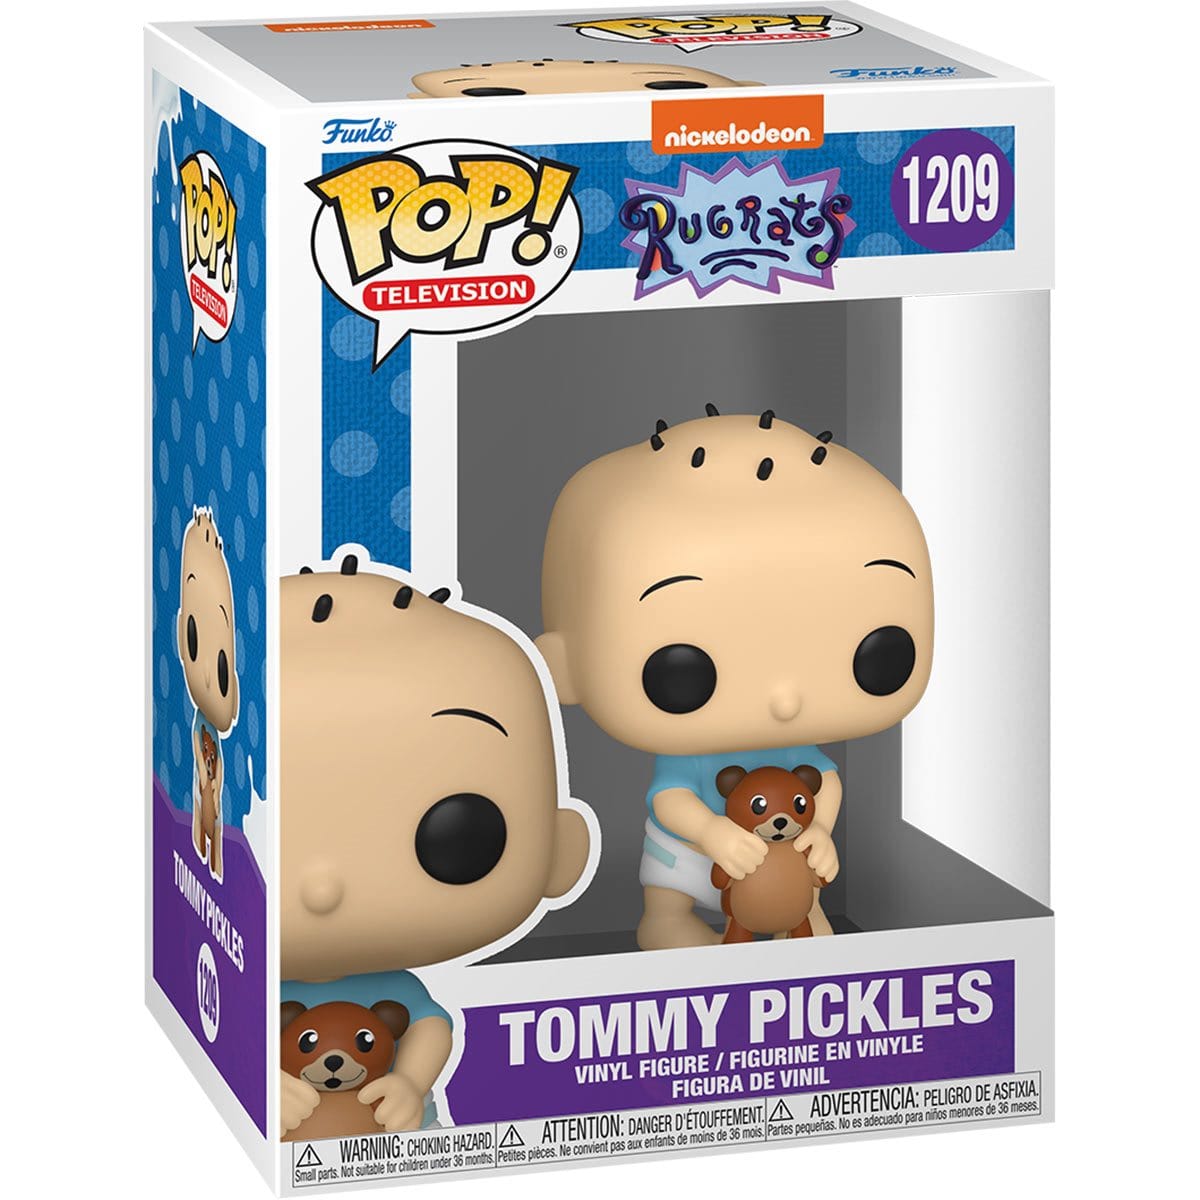 Rugrats Tommy Pickles Pop! Vinyl Figure